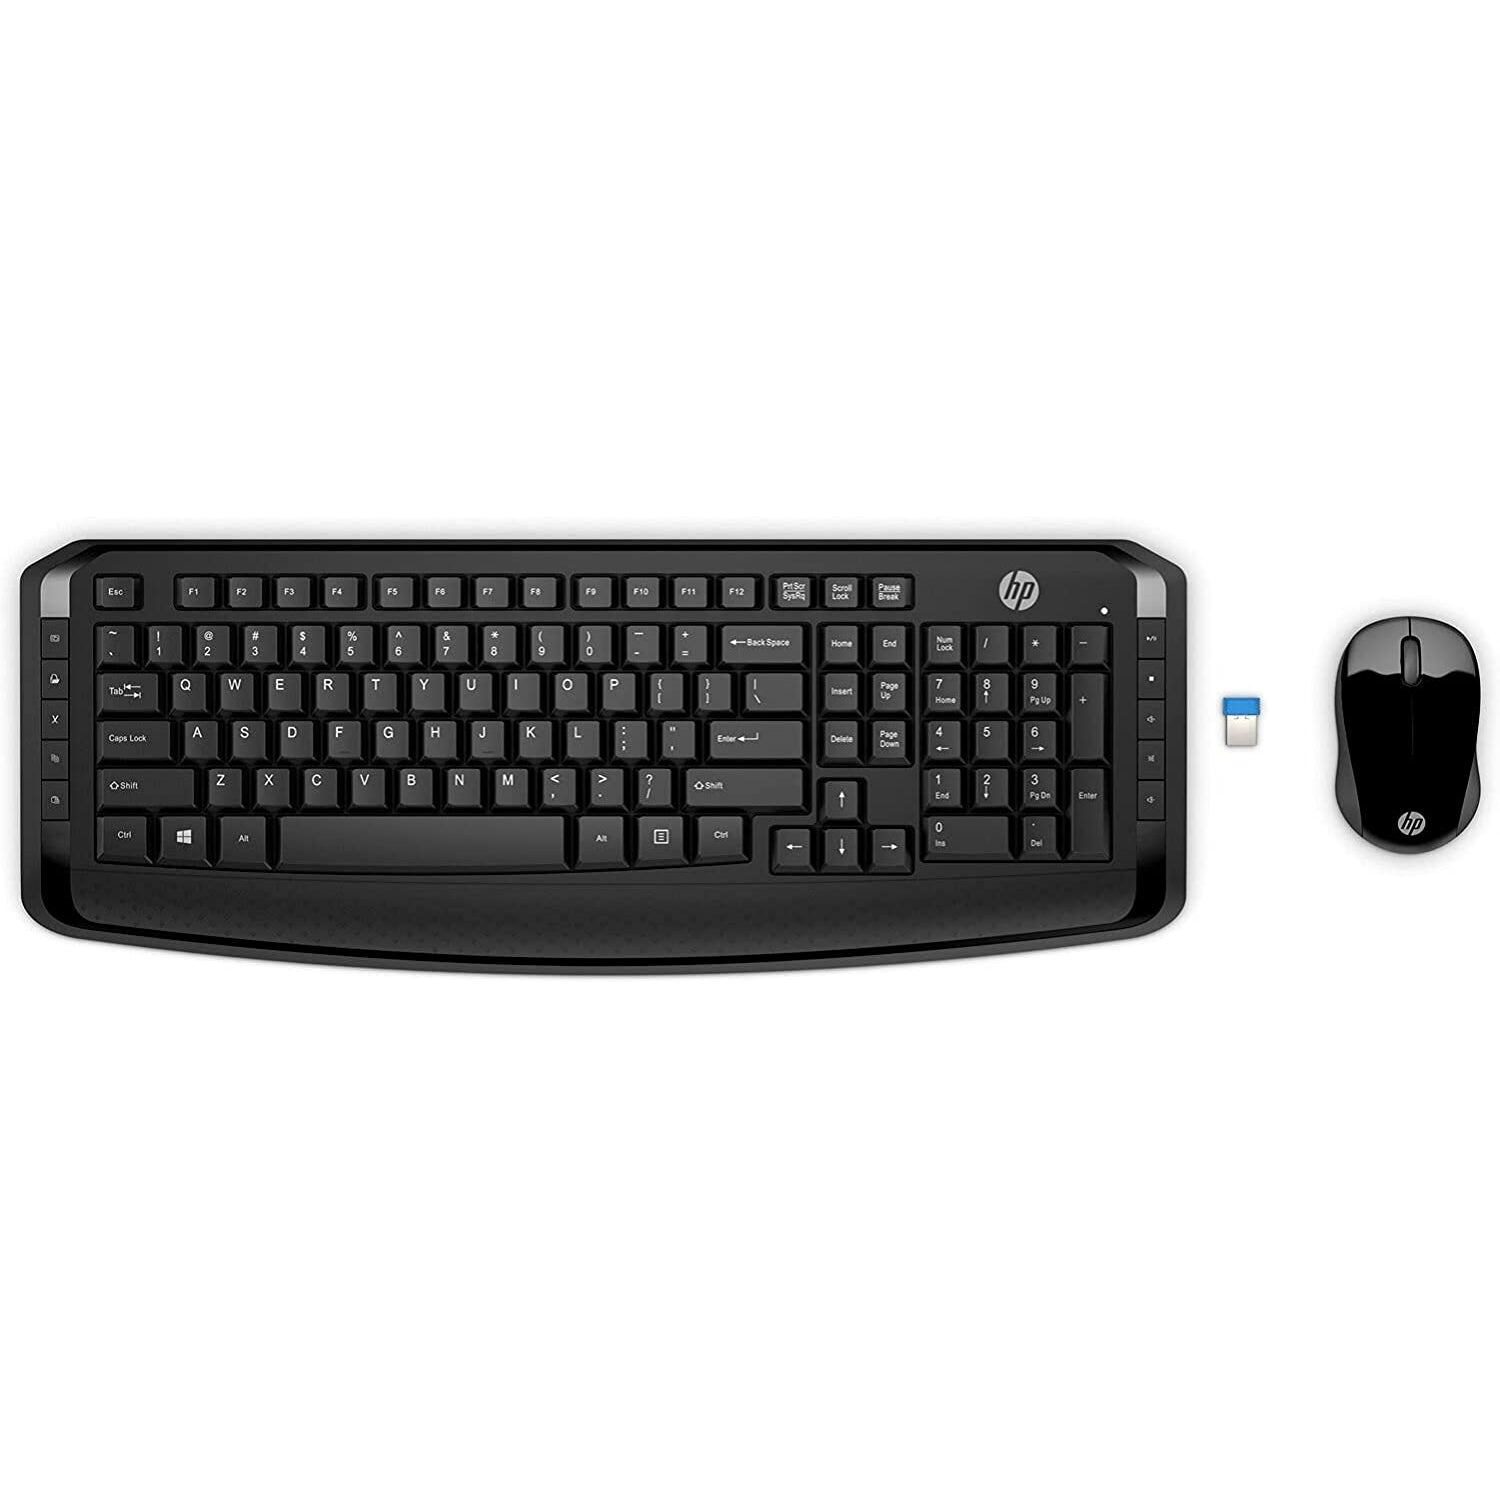 HP Wireless Keyboard and Mouse 300 Combo [UK Layout], Black